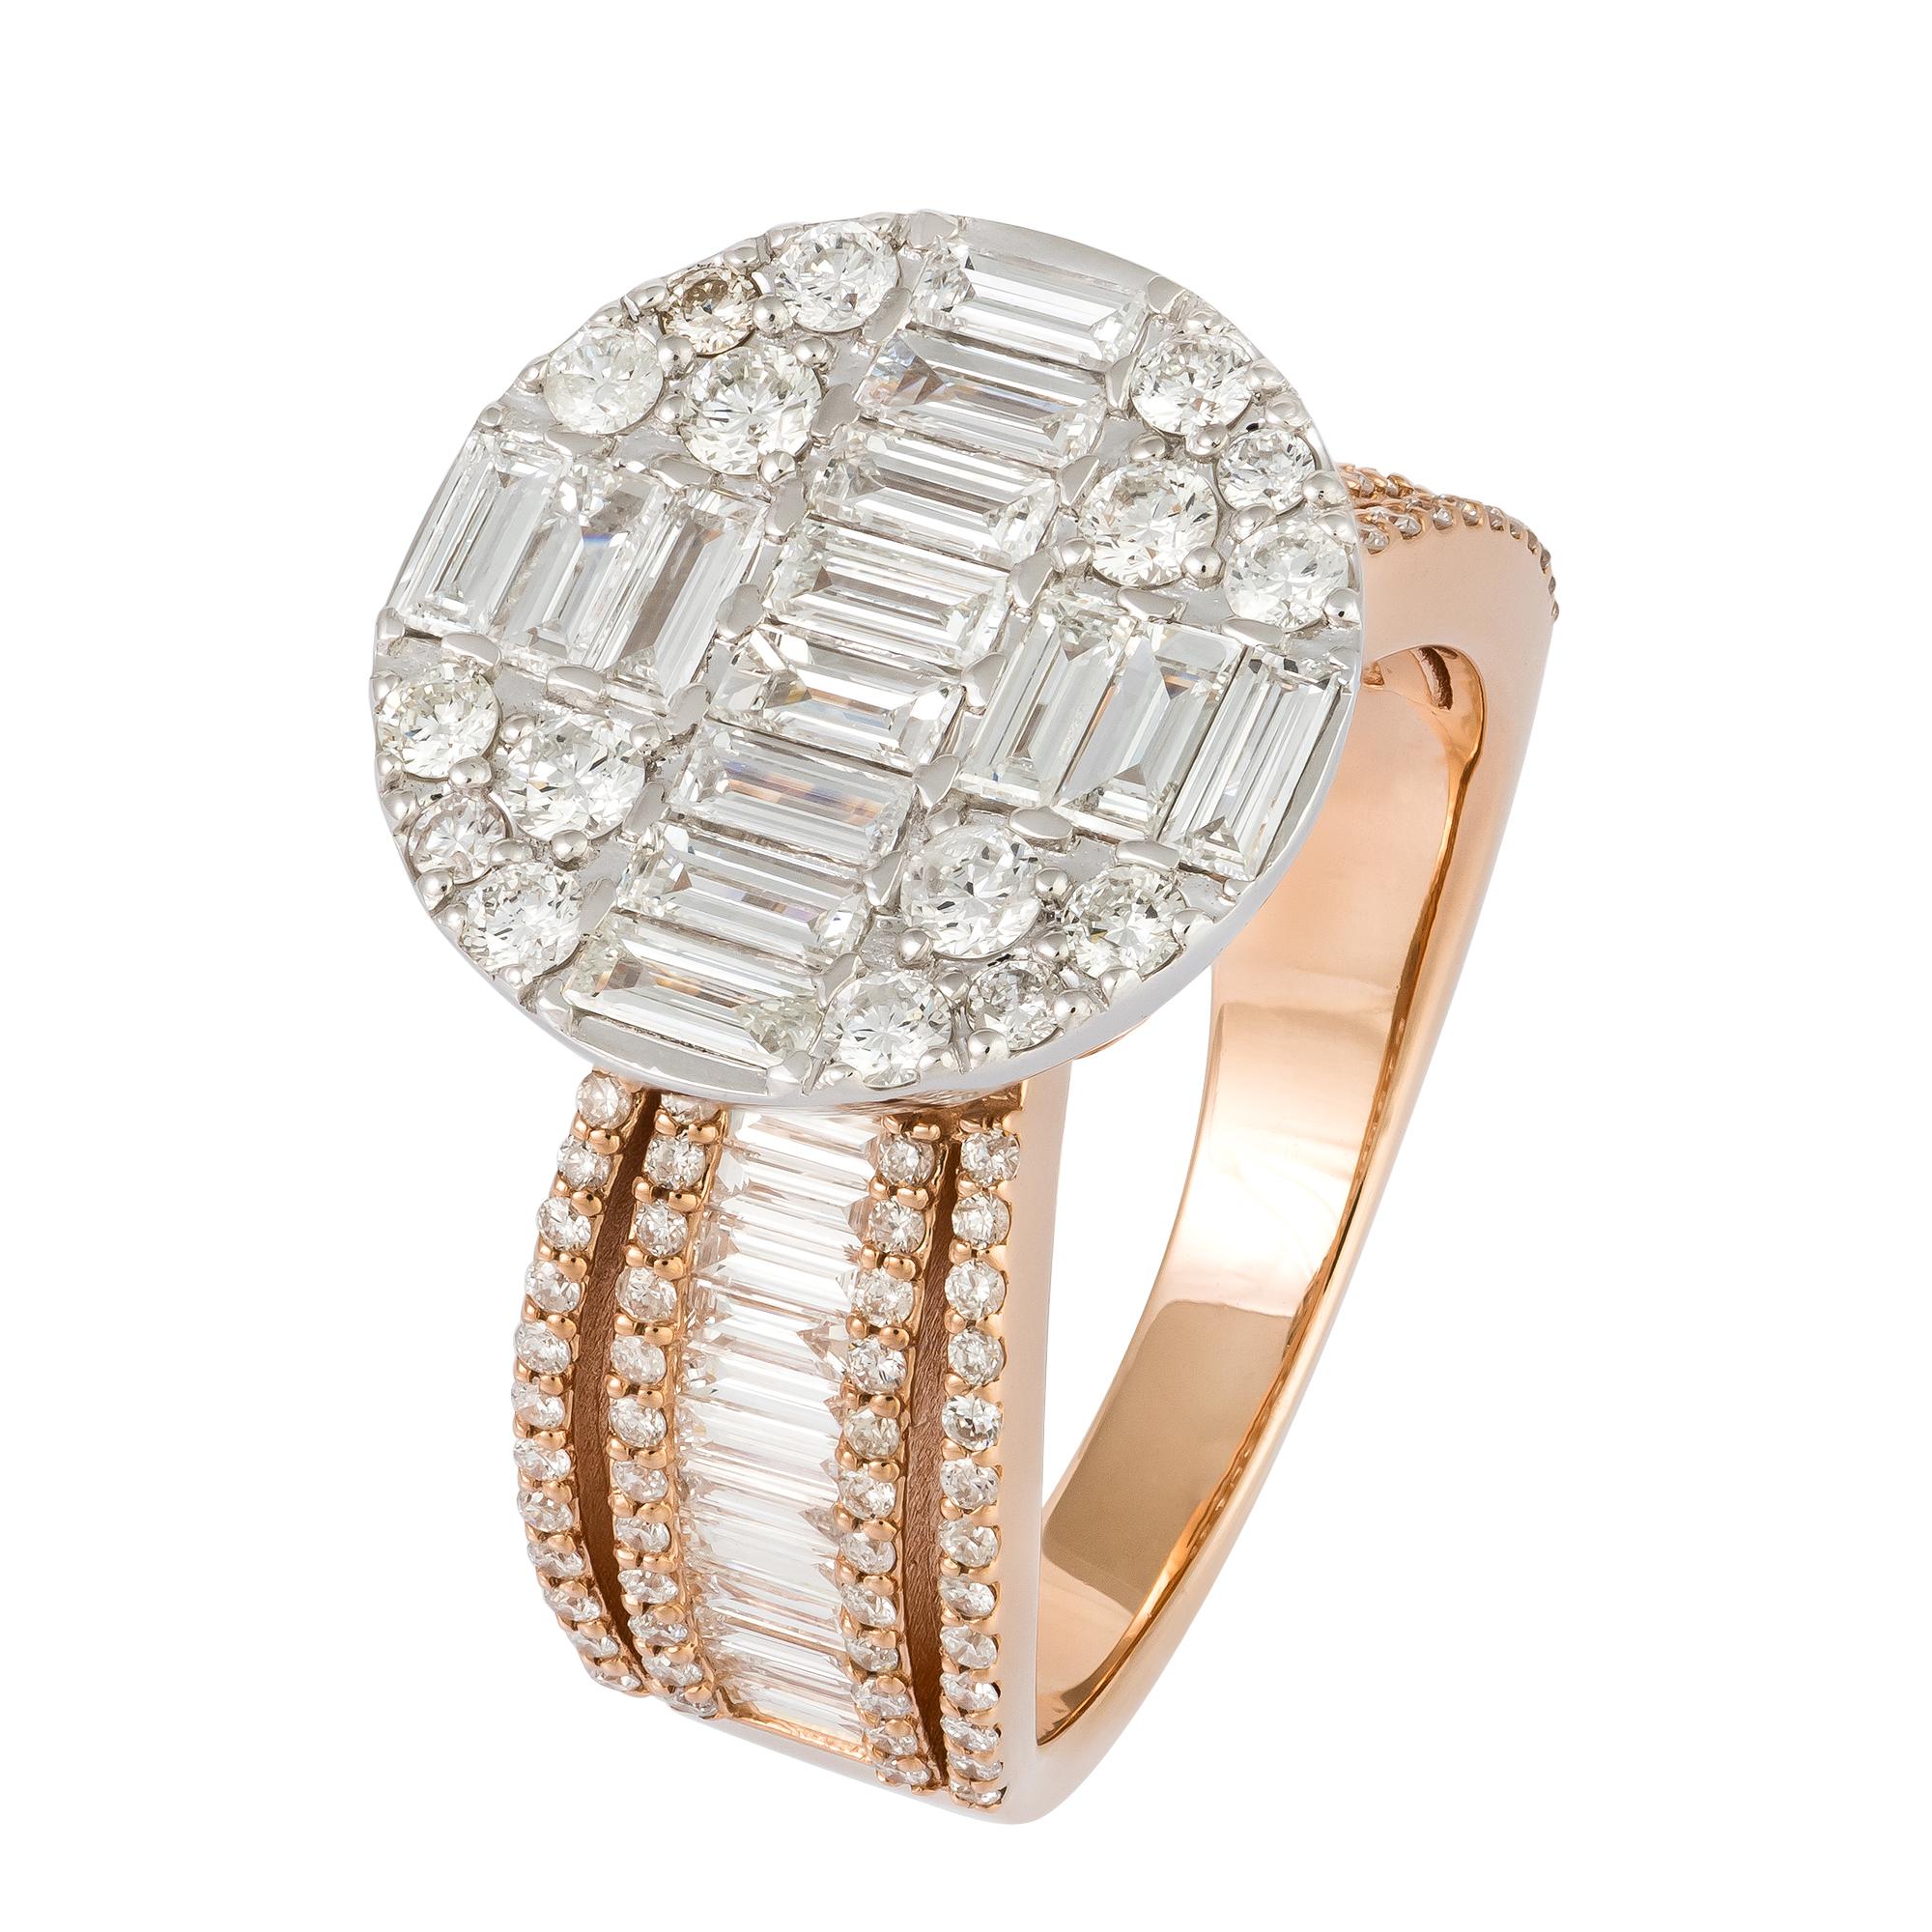 For Sale:  Breathtaking  White Pink 18K Gold White Diamond Ring For Her 4